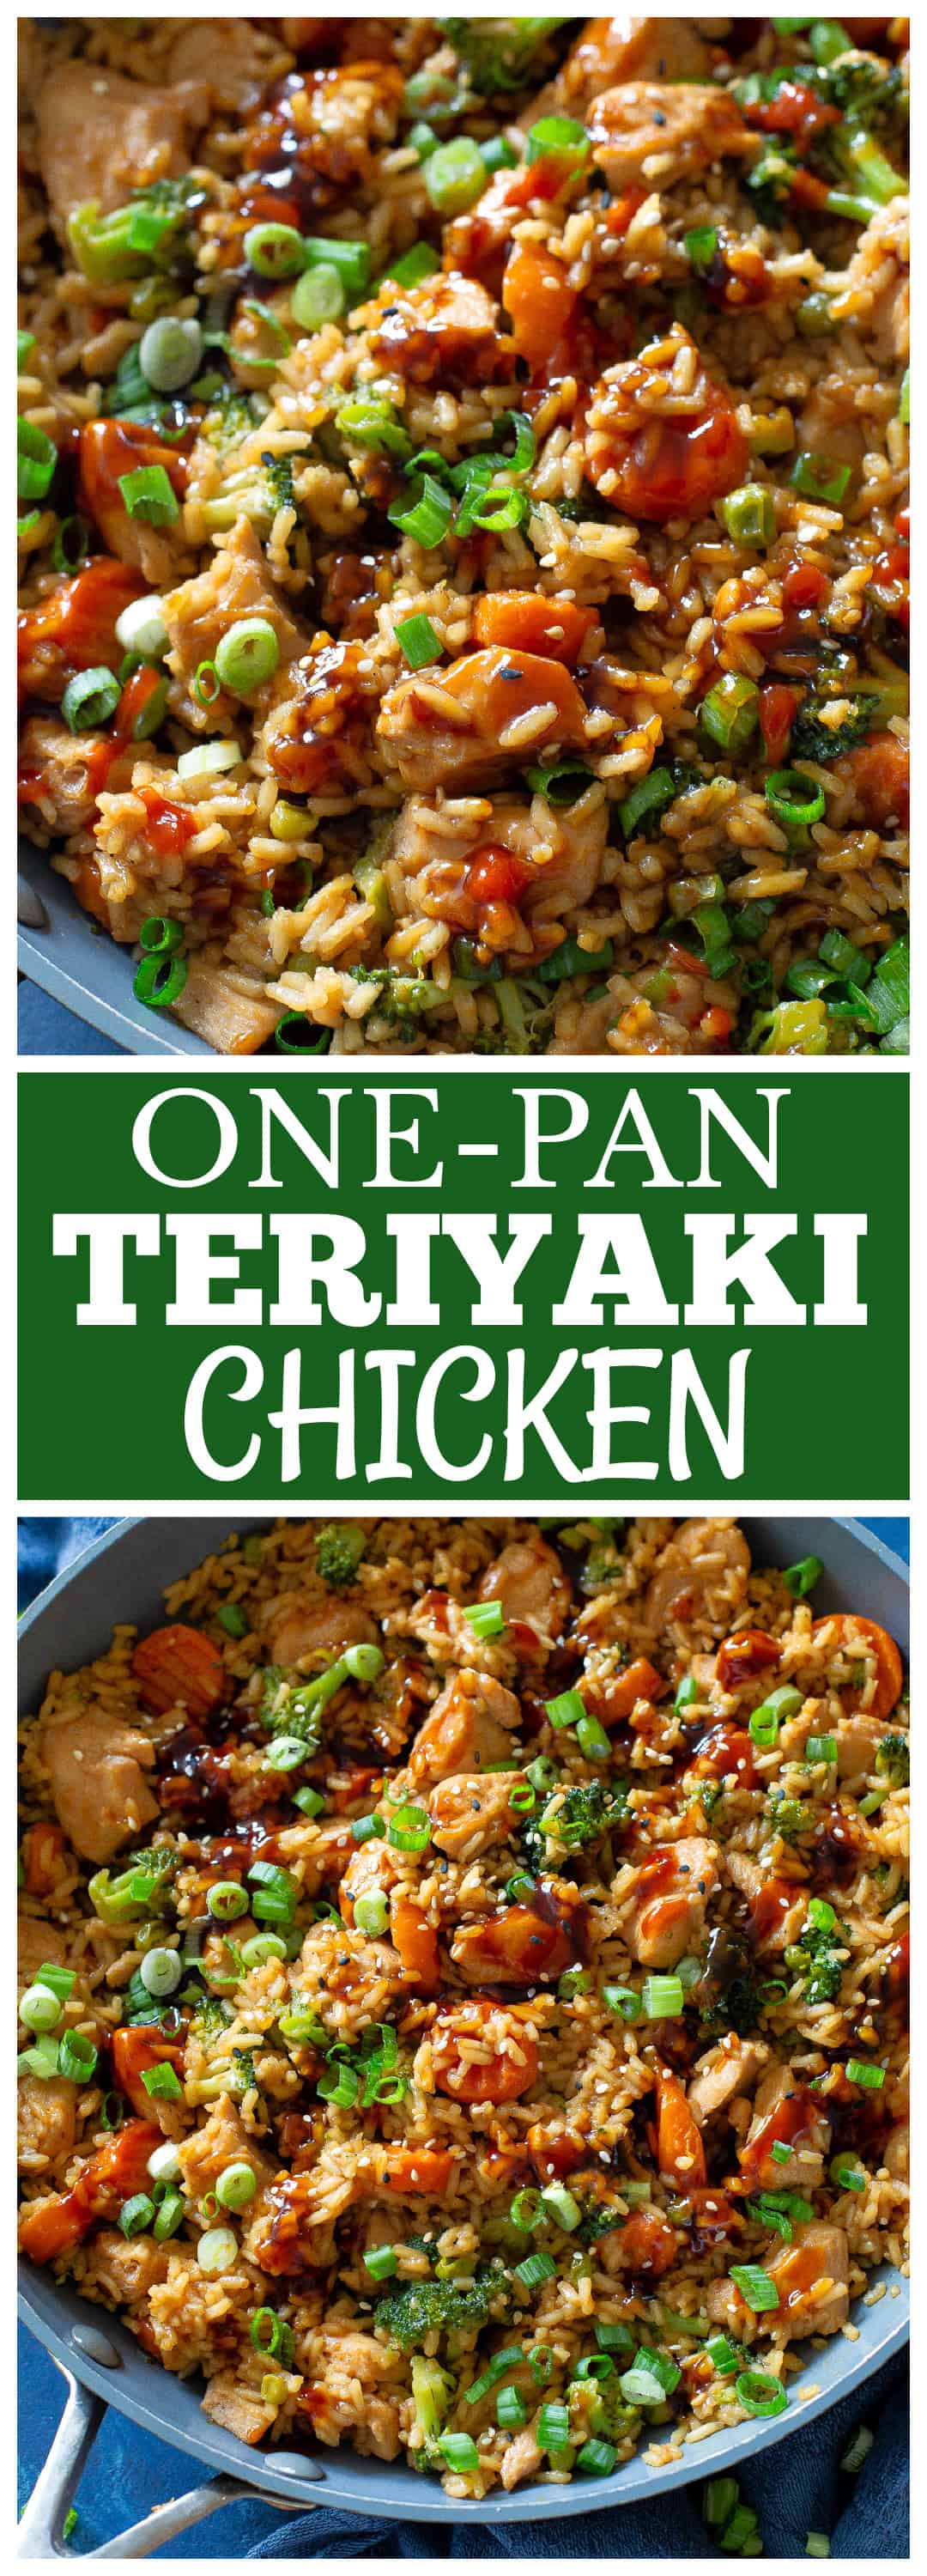 One-Pan Teriyaki Chicken and Rice